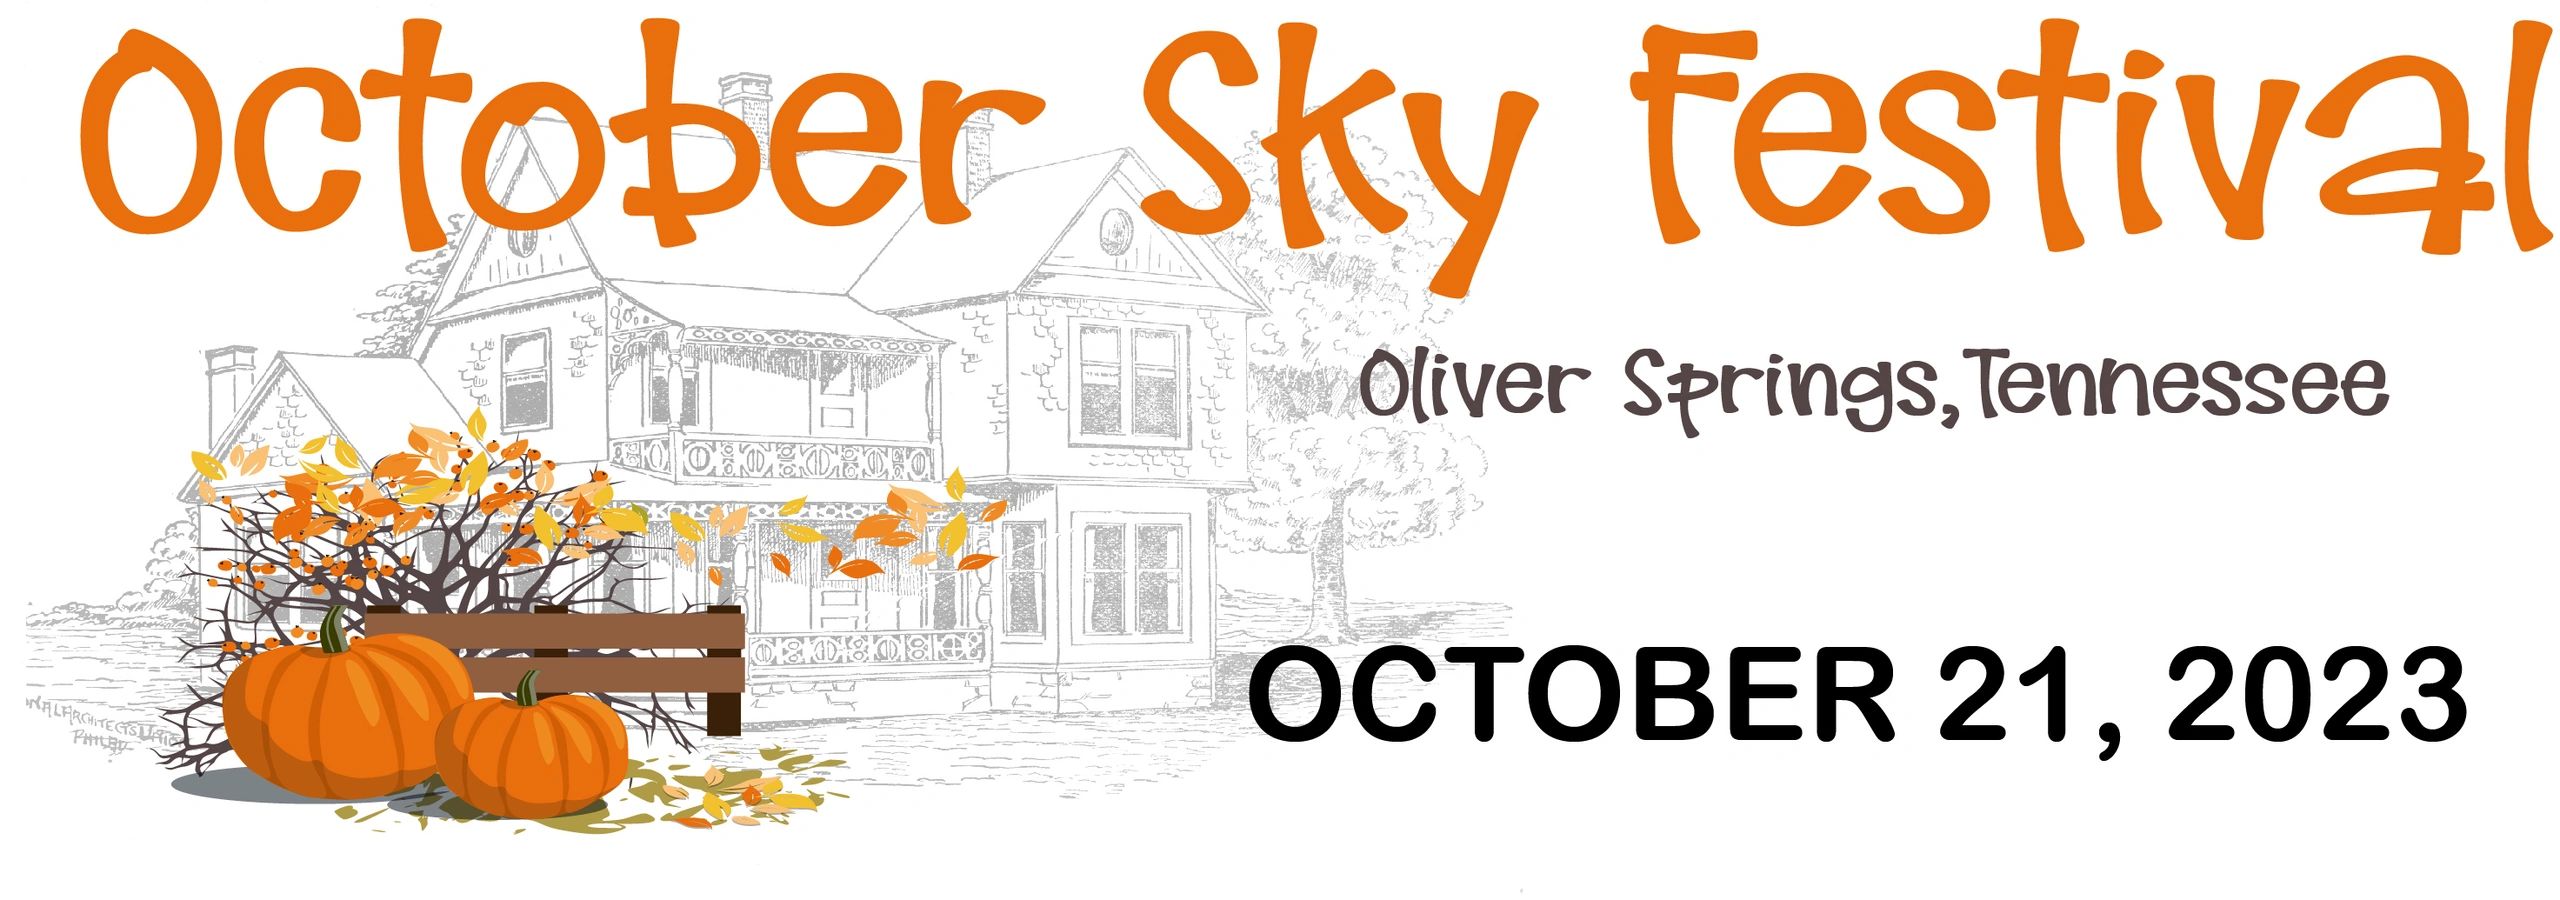 October Sky Festival